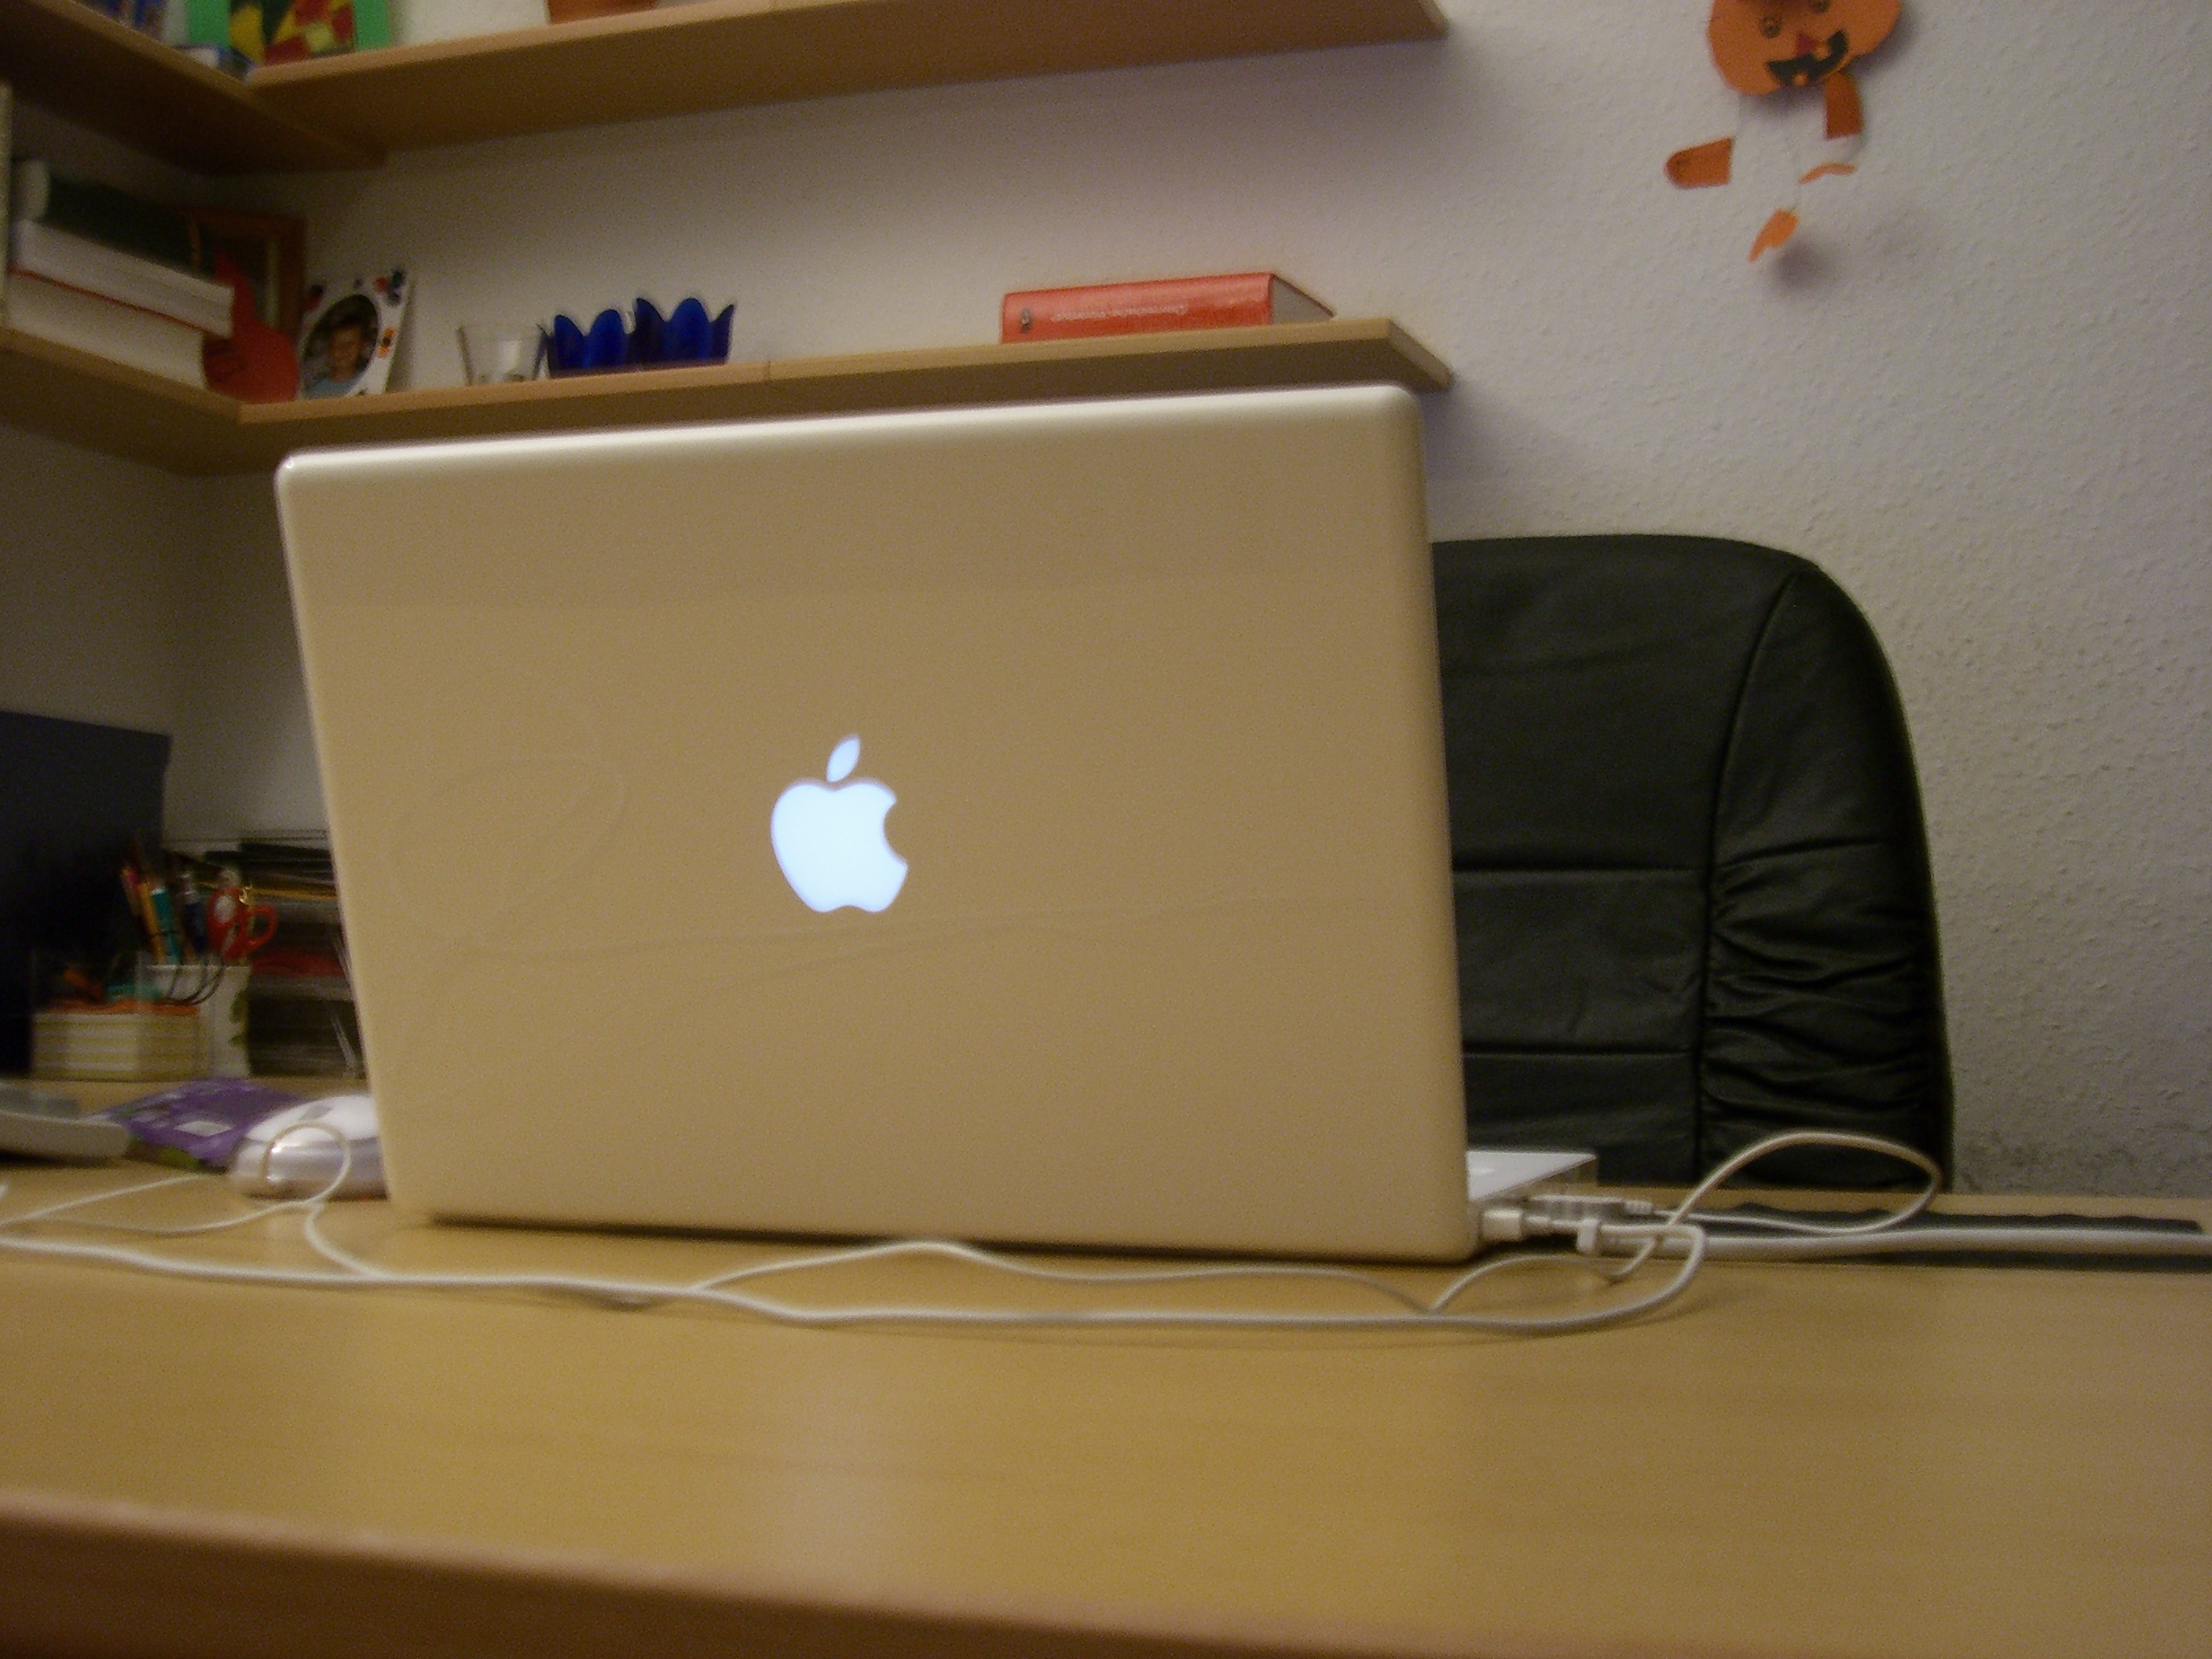 Clear компьютер. Ноутбук Apple Эстетика. Стол с документами эйпл ноутбук. MACBOOK line in.